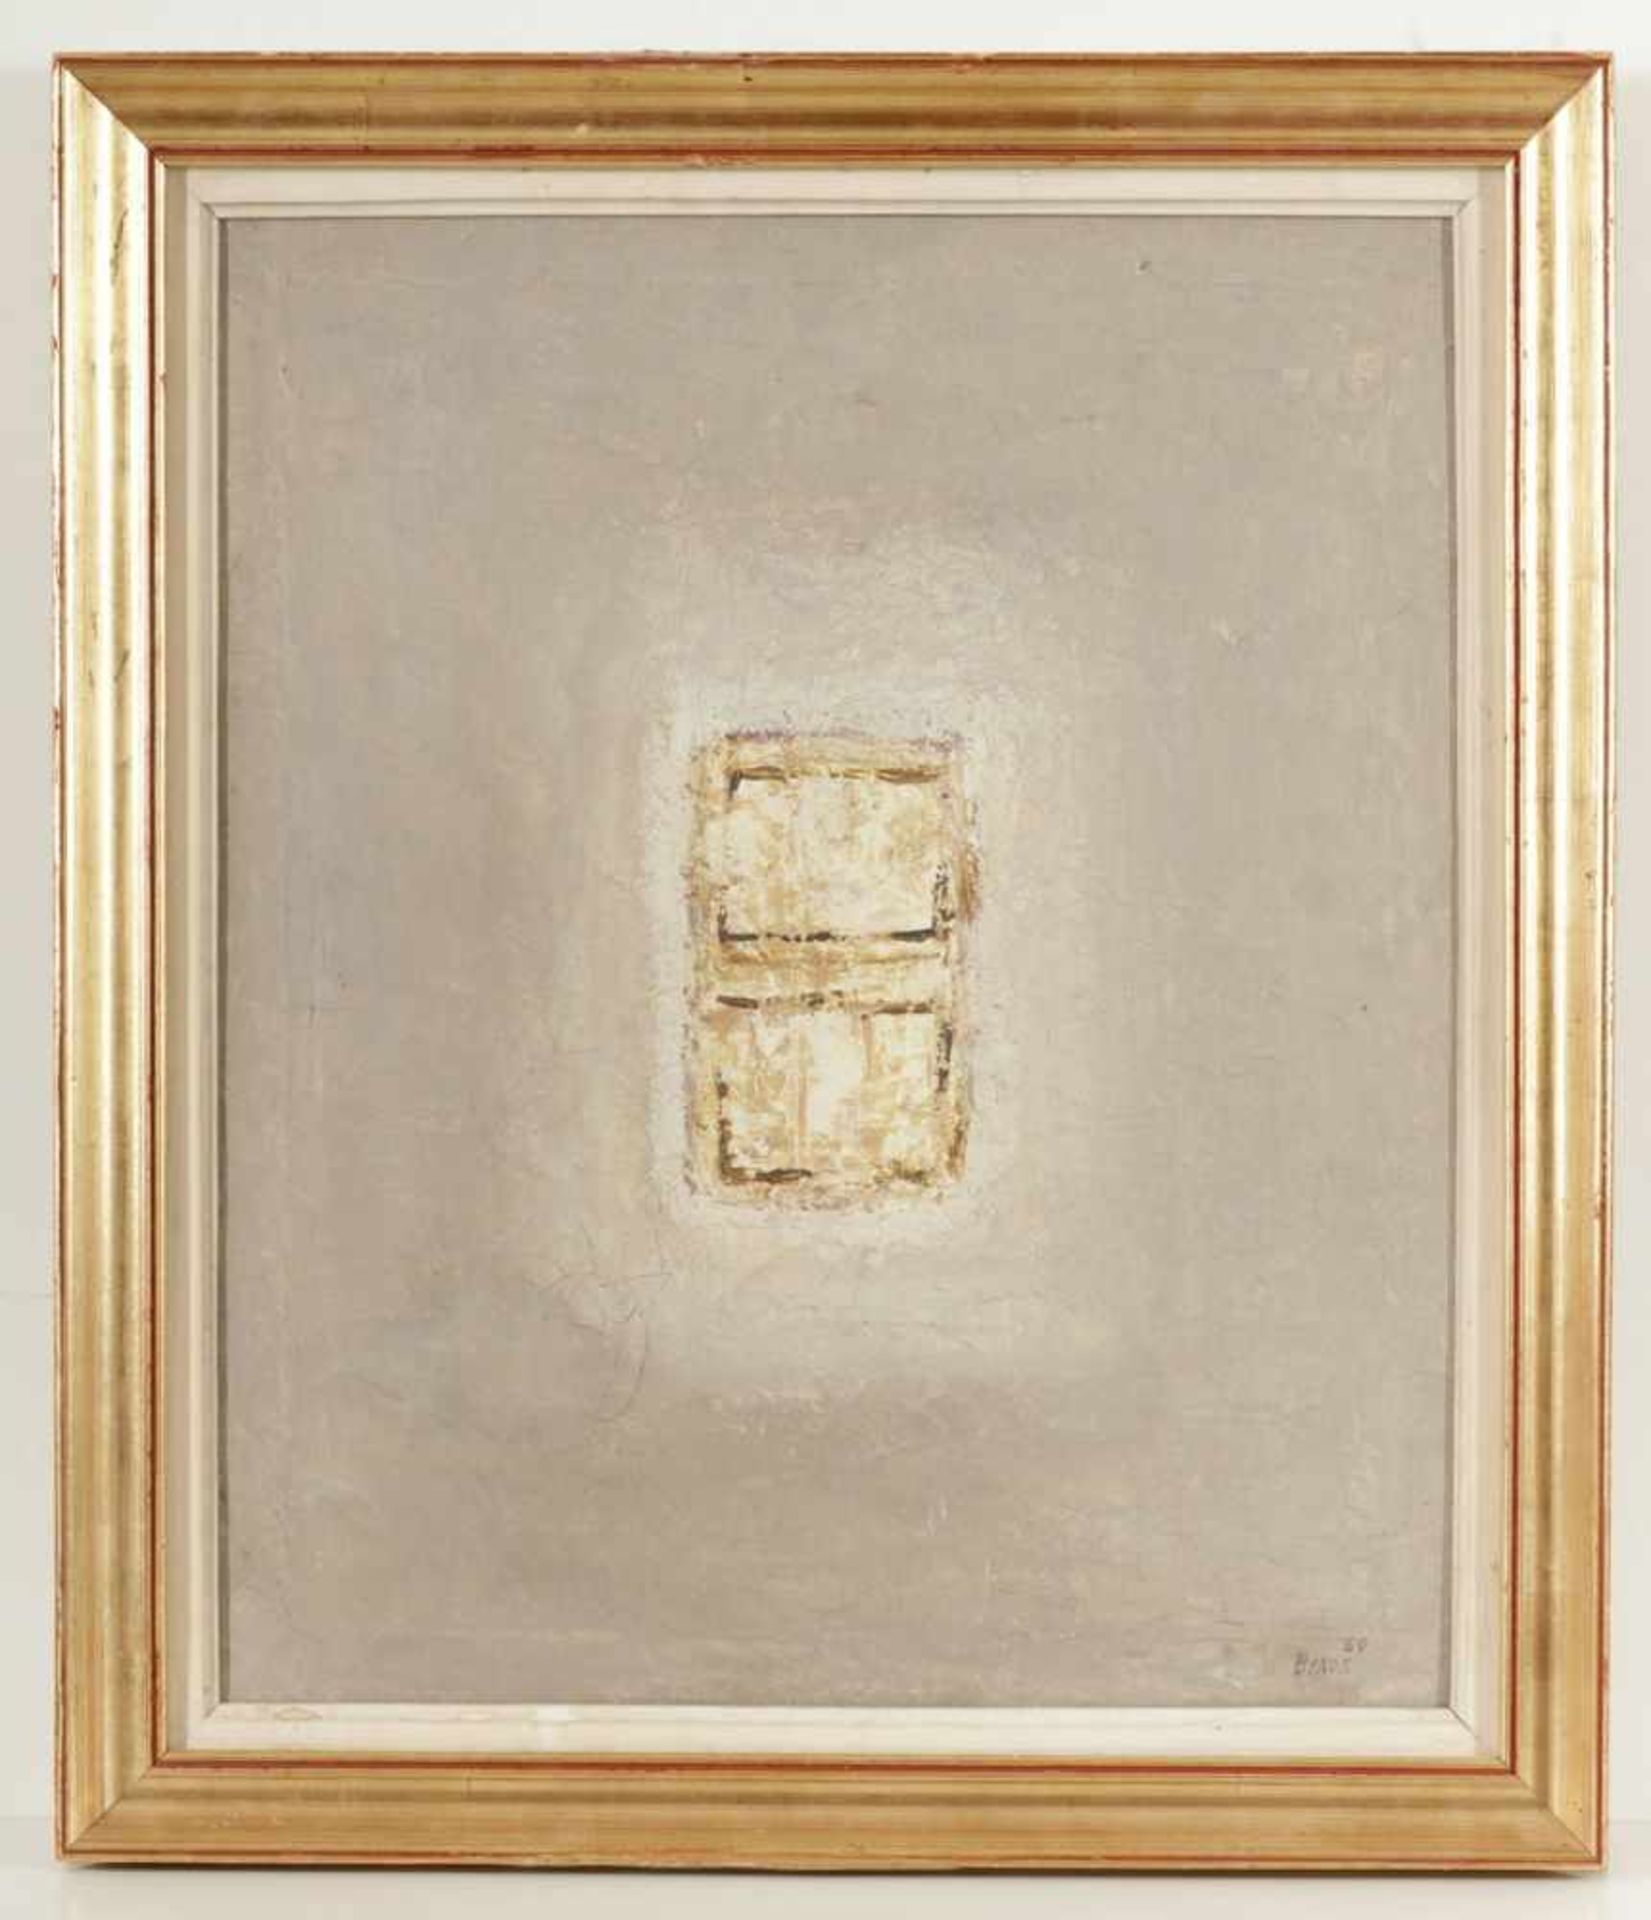 Igor Vulokh1938 Kasan - 2012 - Abstrakte Komposition - Öl/Lwd. 60,5 x 50 cm. Sign. und dat. r. u.: - Image 2 of 2